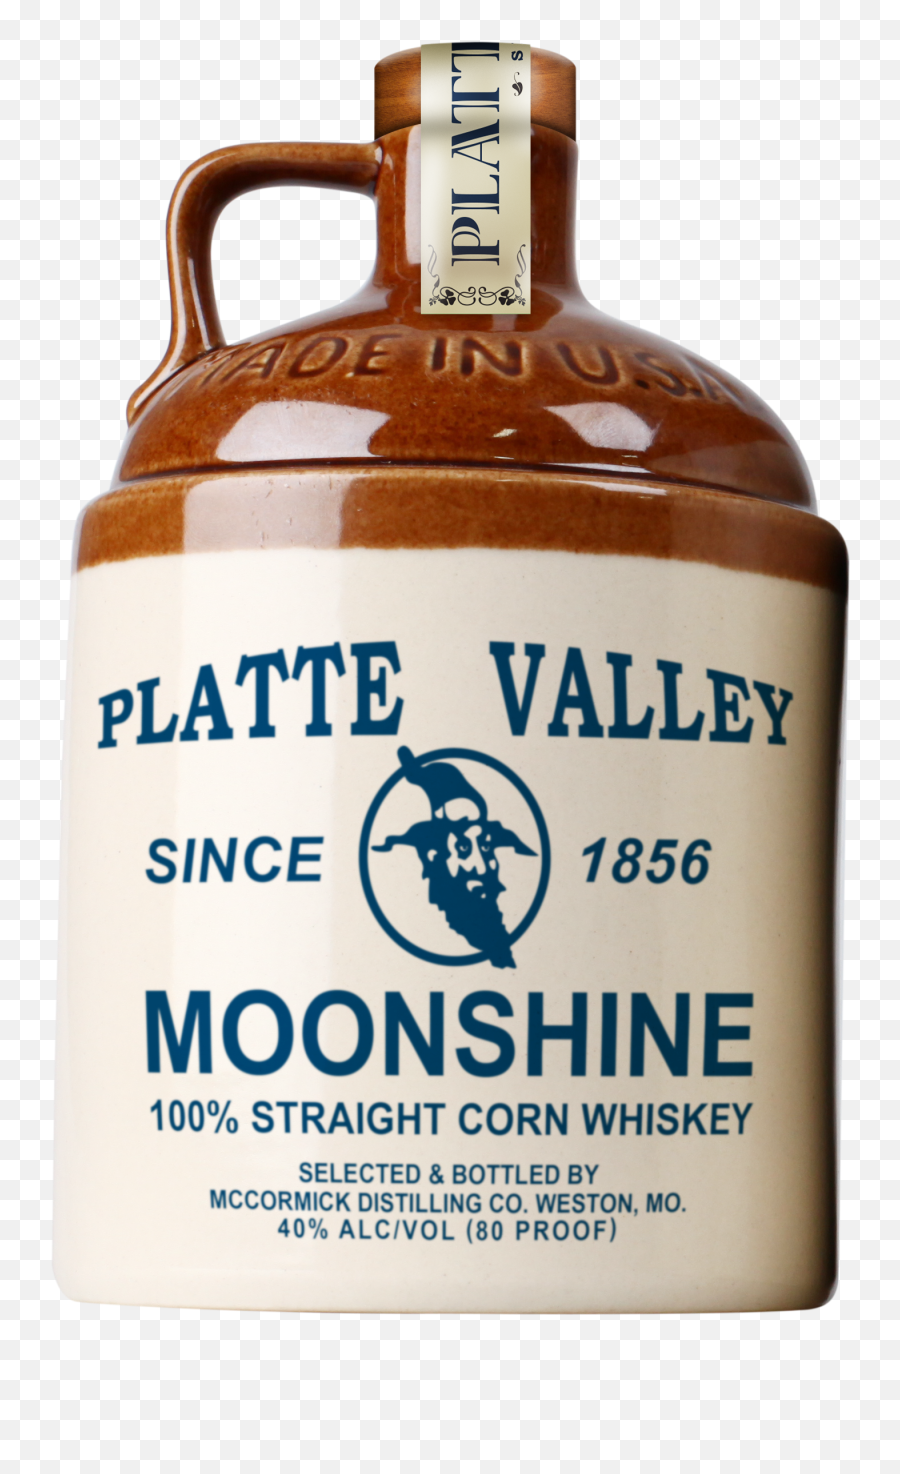 Image Result For Moonshine Png - Moonshine Whiskey,Moonshine Png